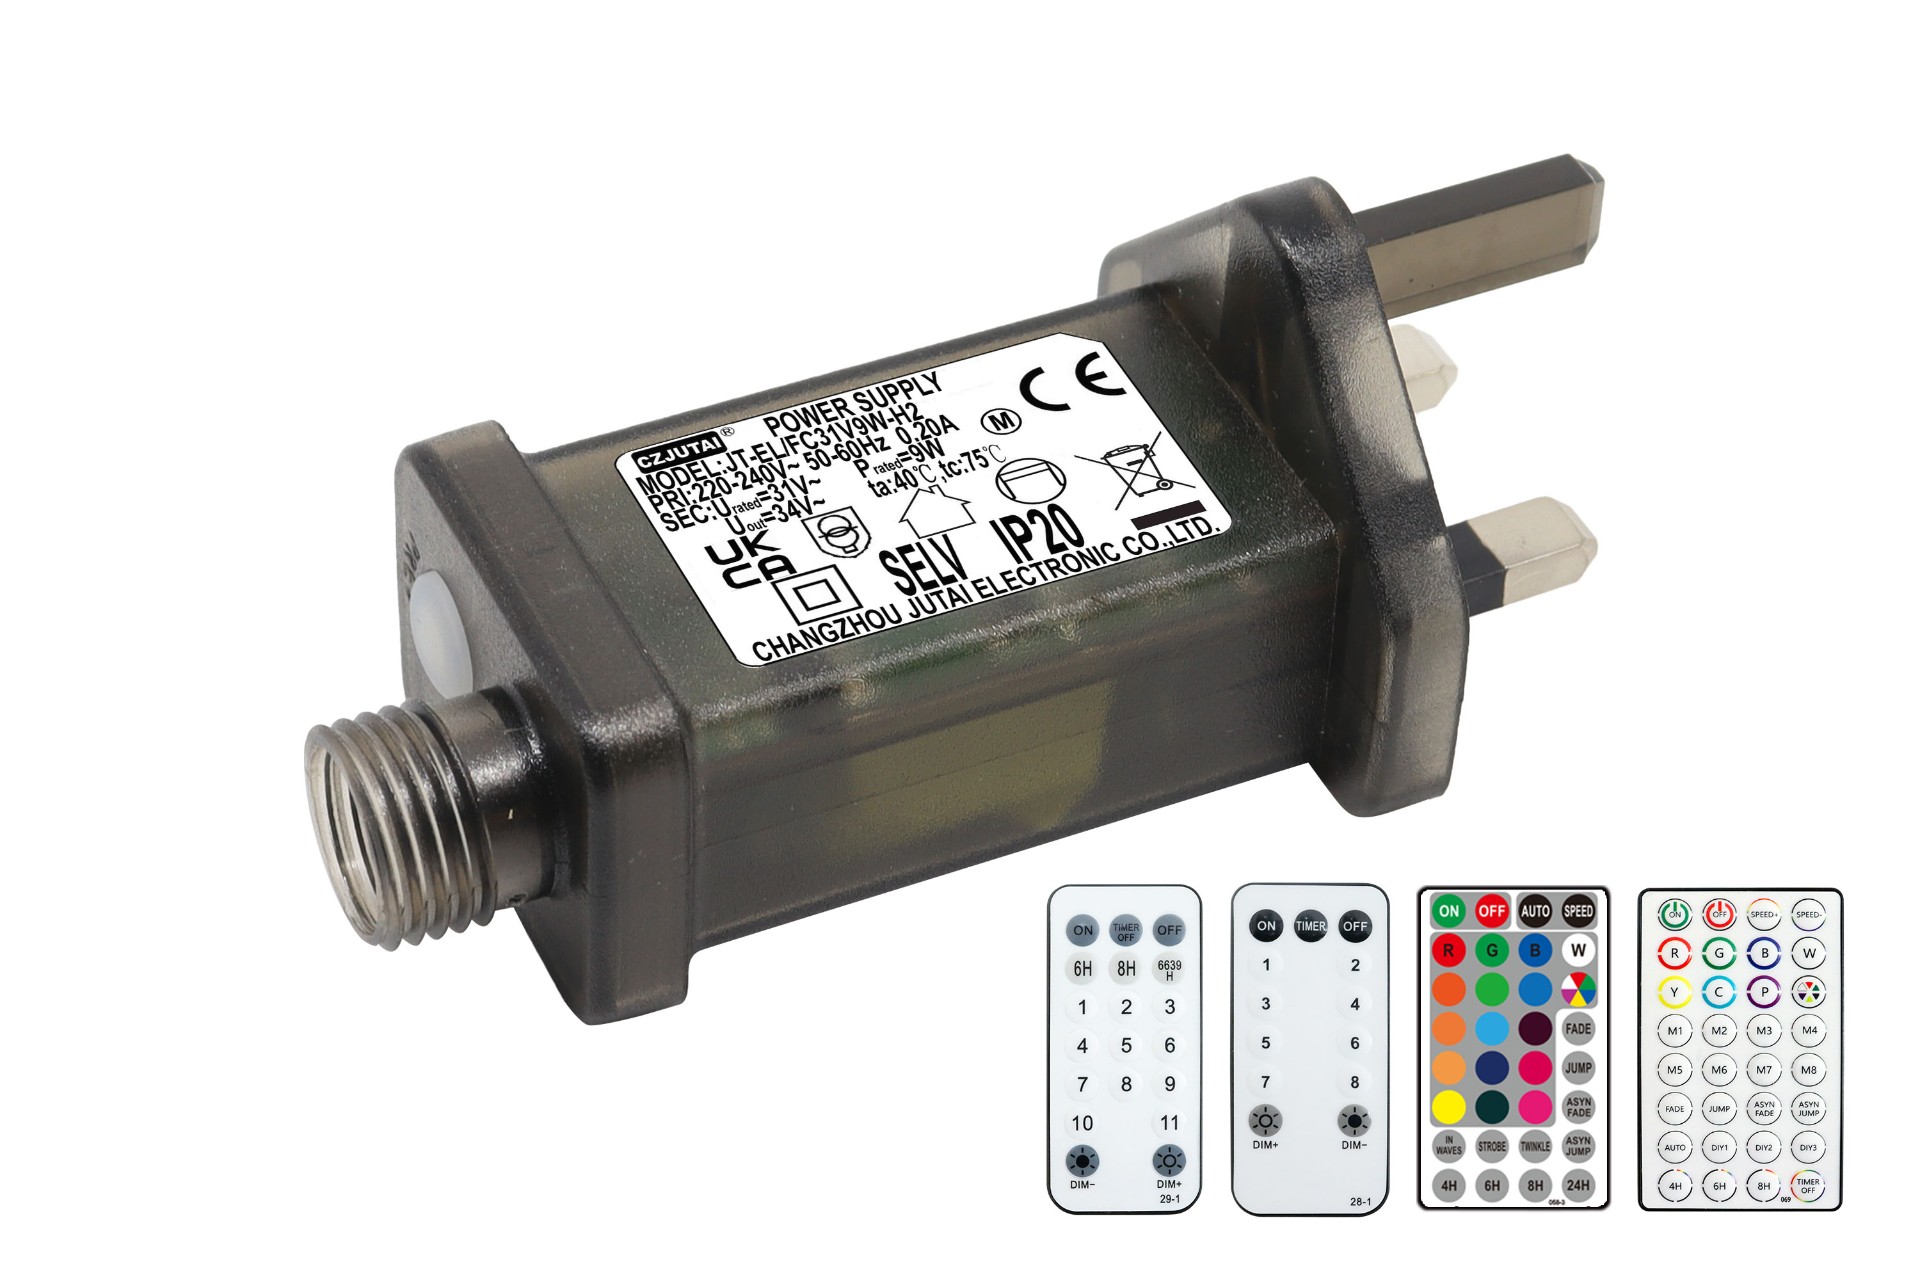 10W Series UKCA Infrared Remote Control Power Supply